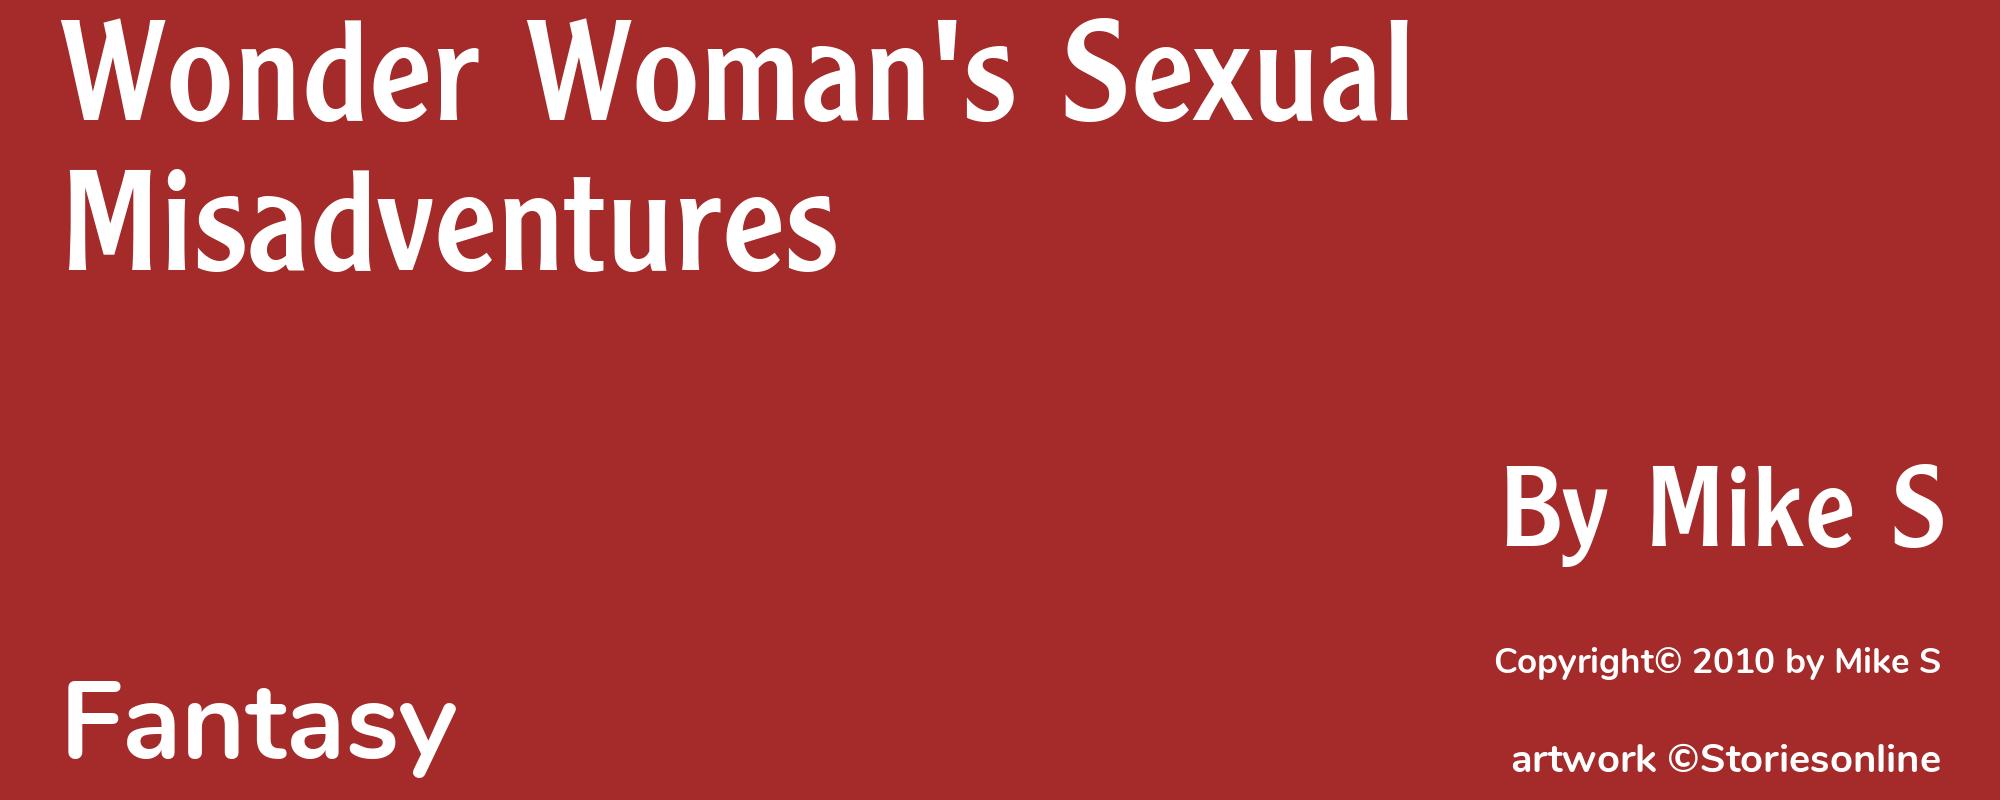 Wonder Woman's Sexual Misadventures - Cover